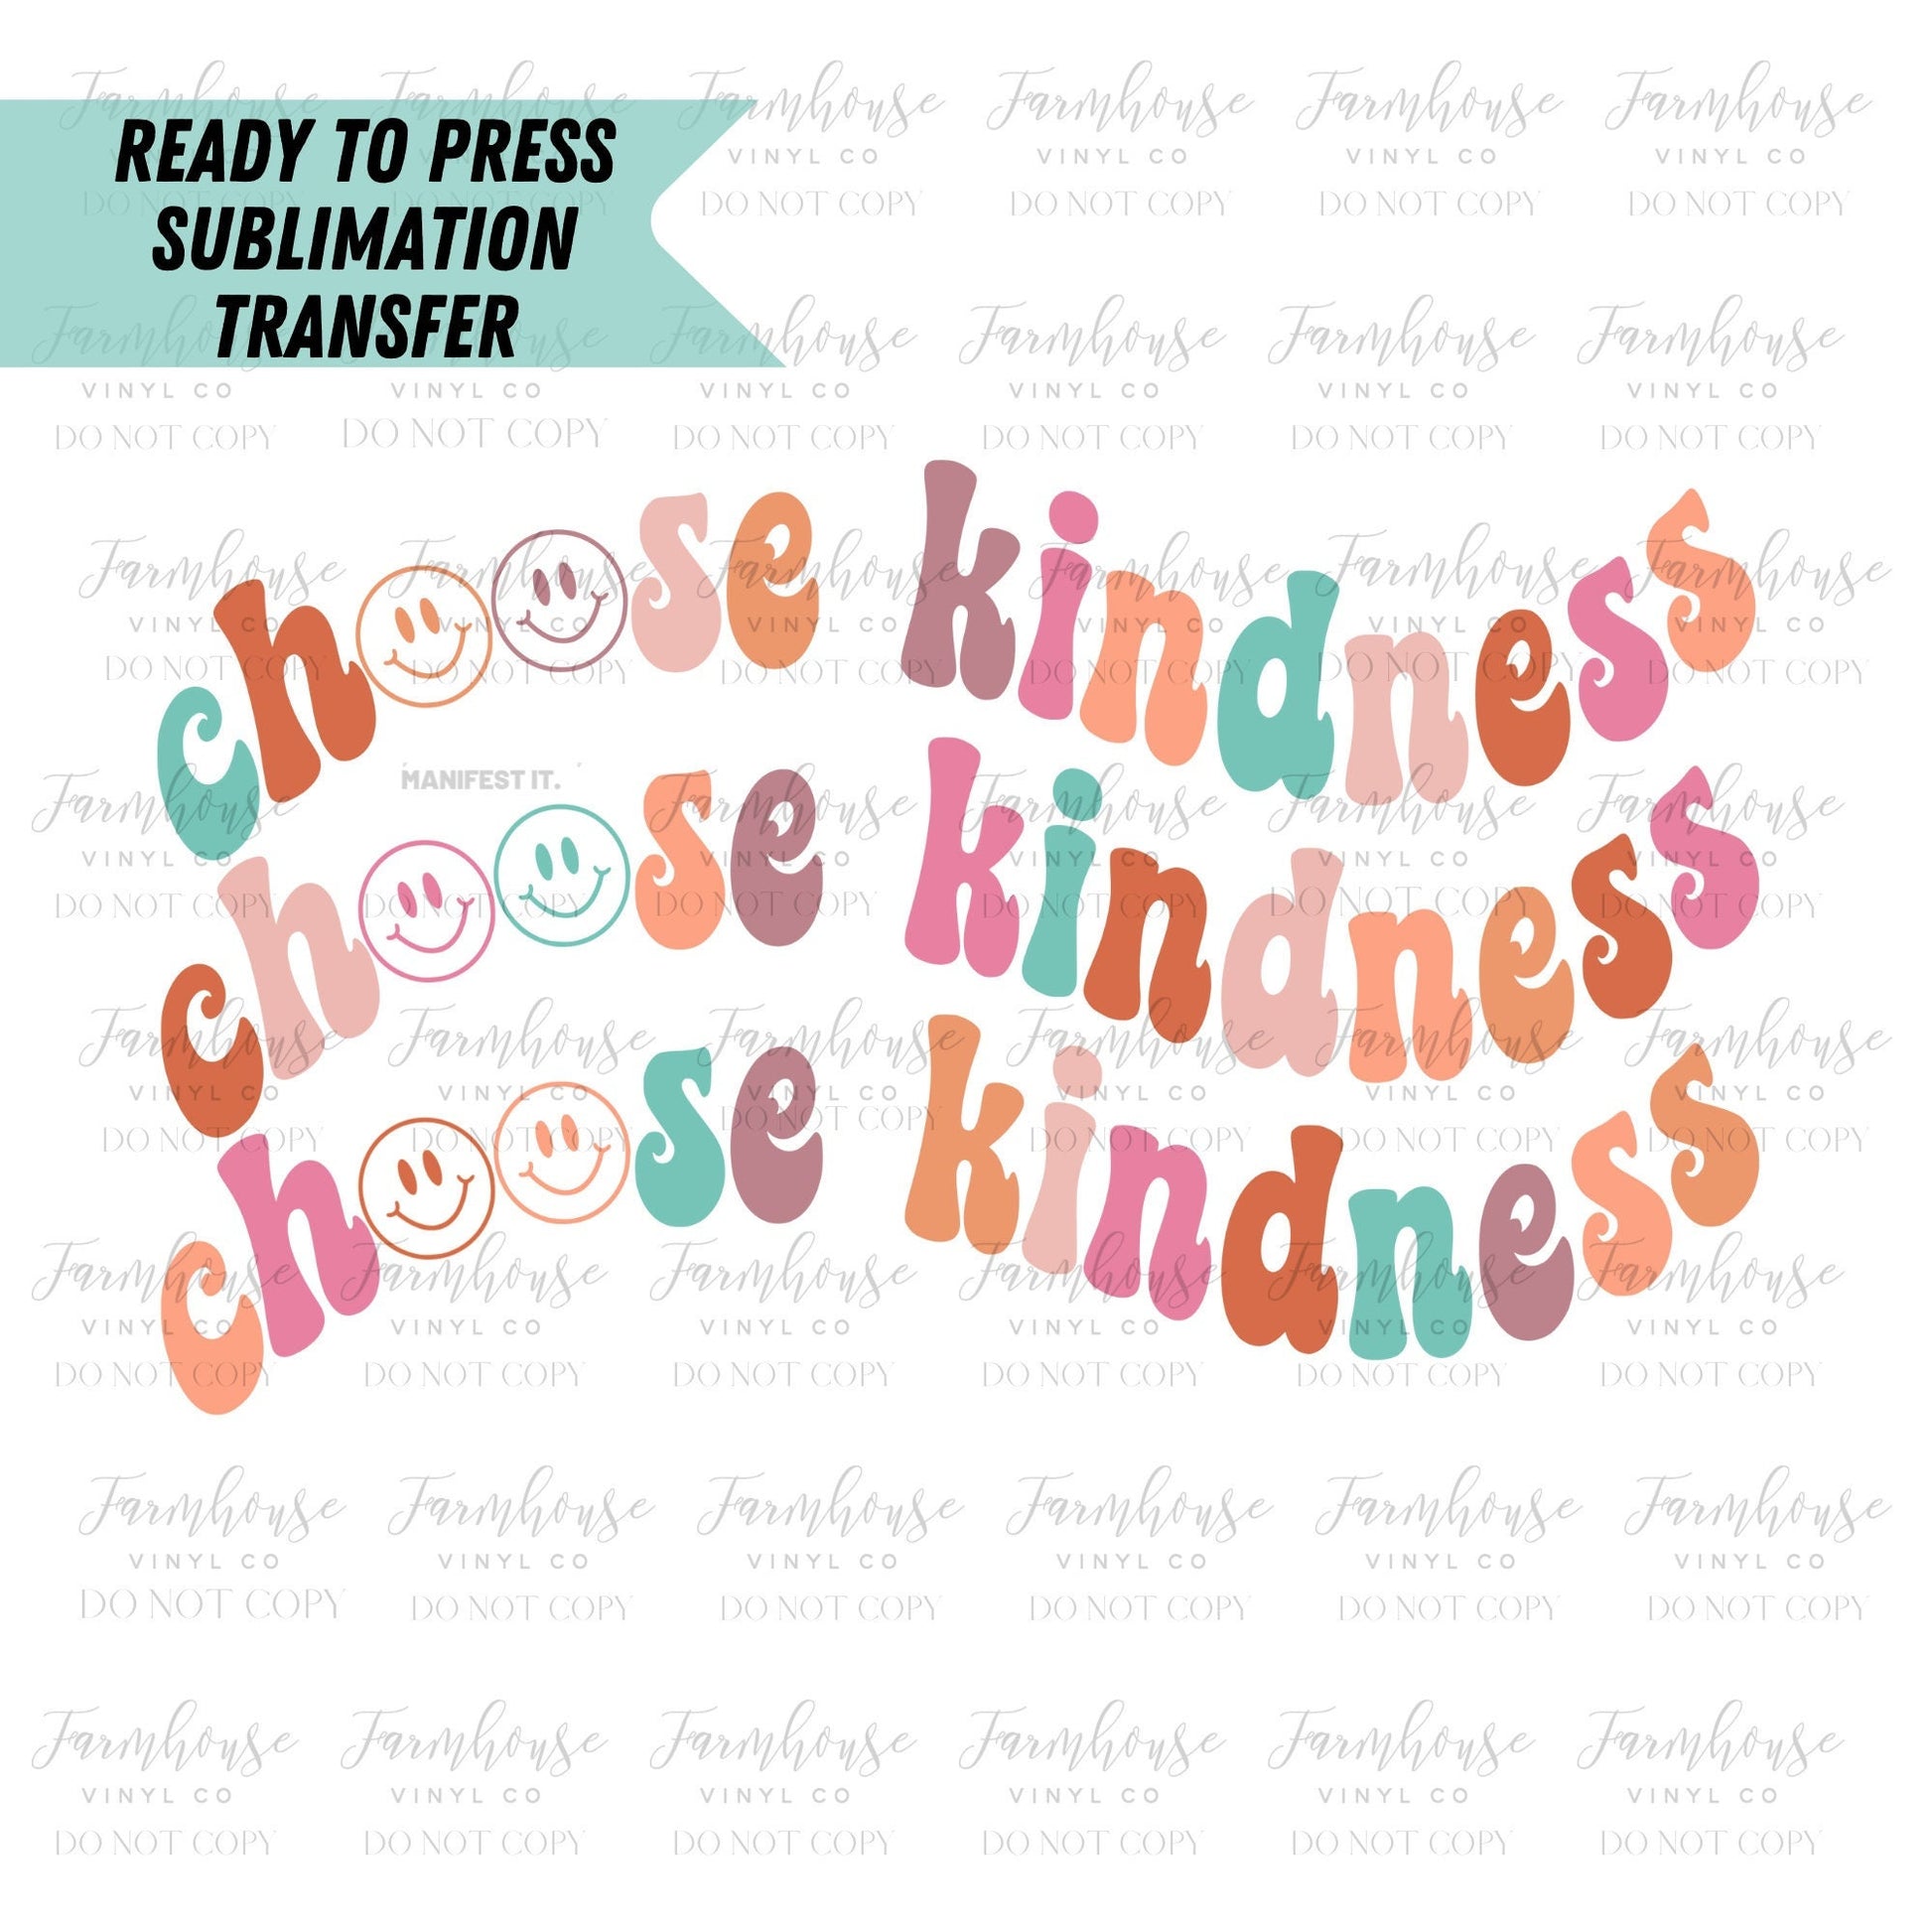 Choose Kindness Retro, Ready to Press Sublimation Transfer, Sublimation Transfers, Heat Transfer, Wavy Retro Font, Positivity Design - Farmhouse Vinyl Co